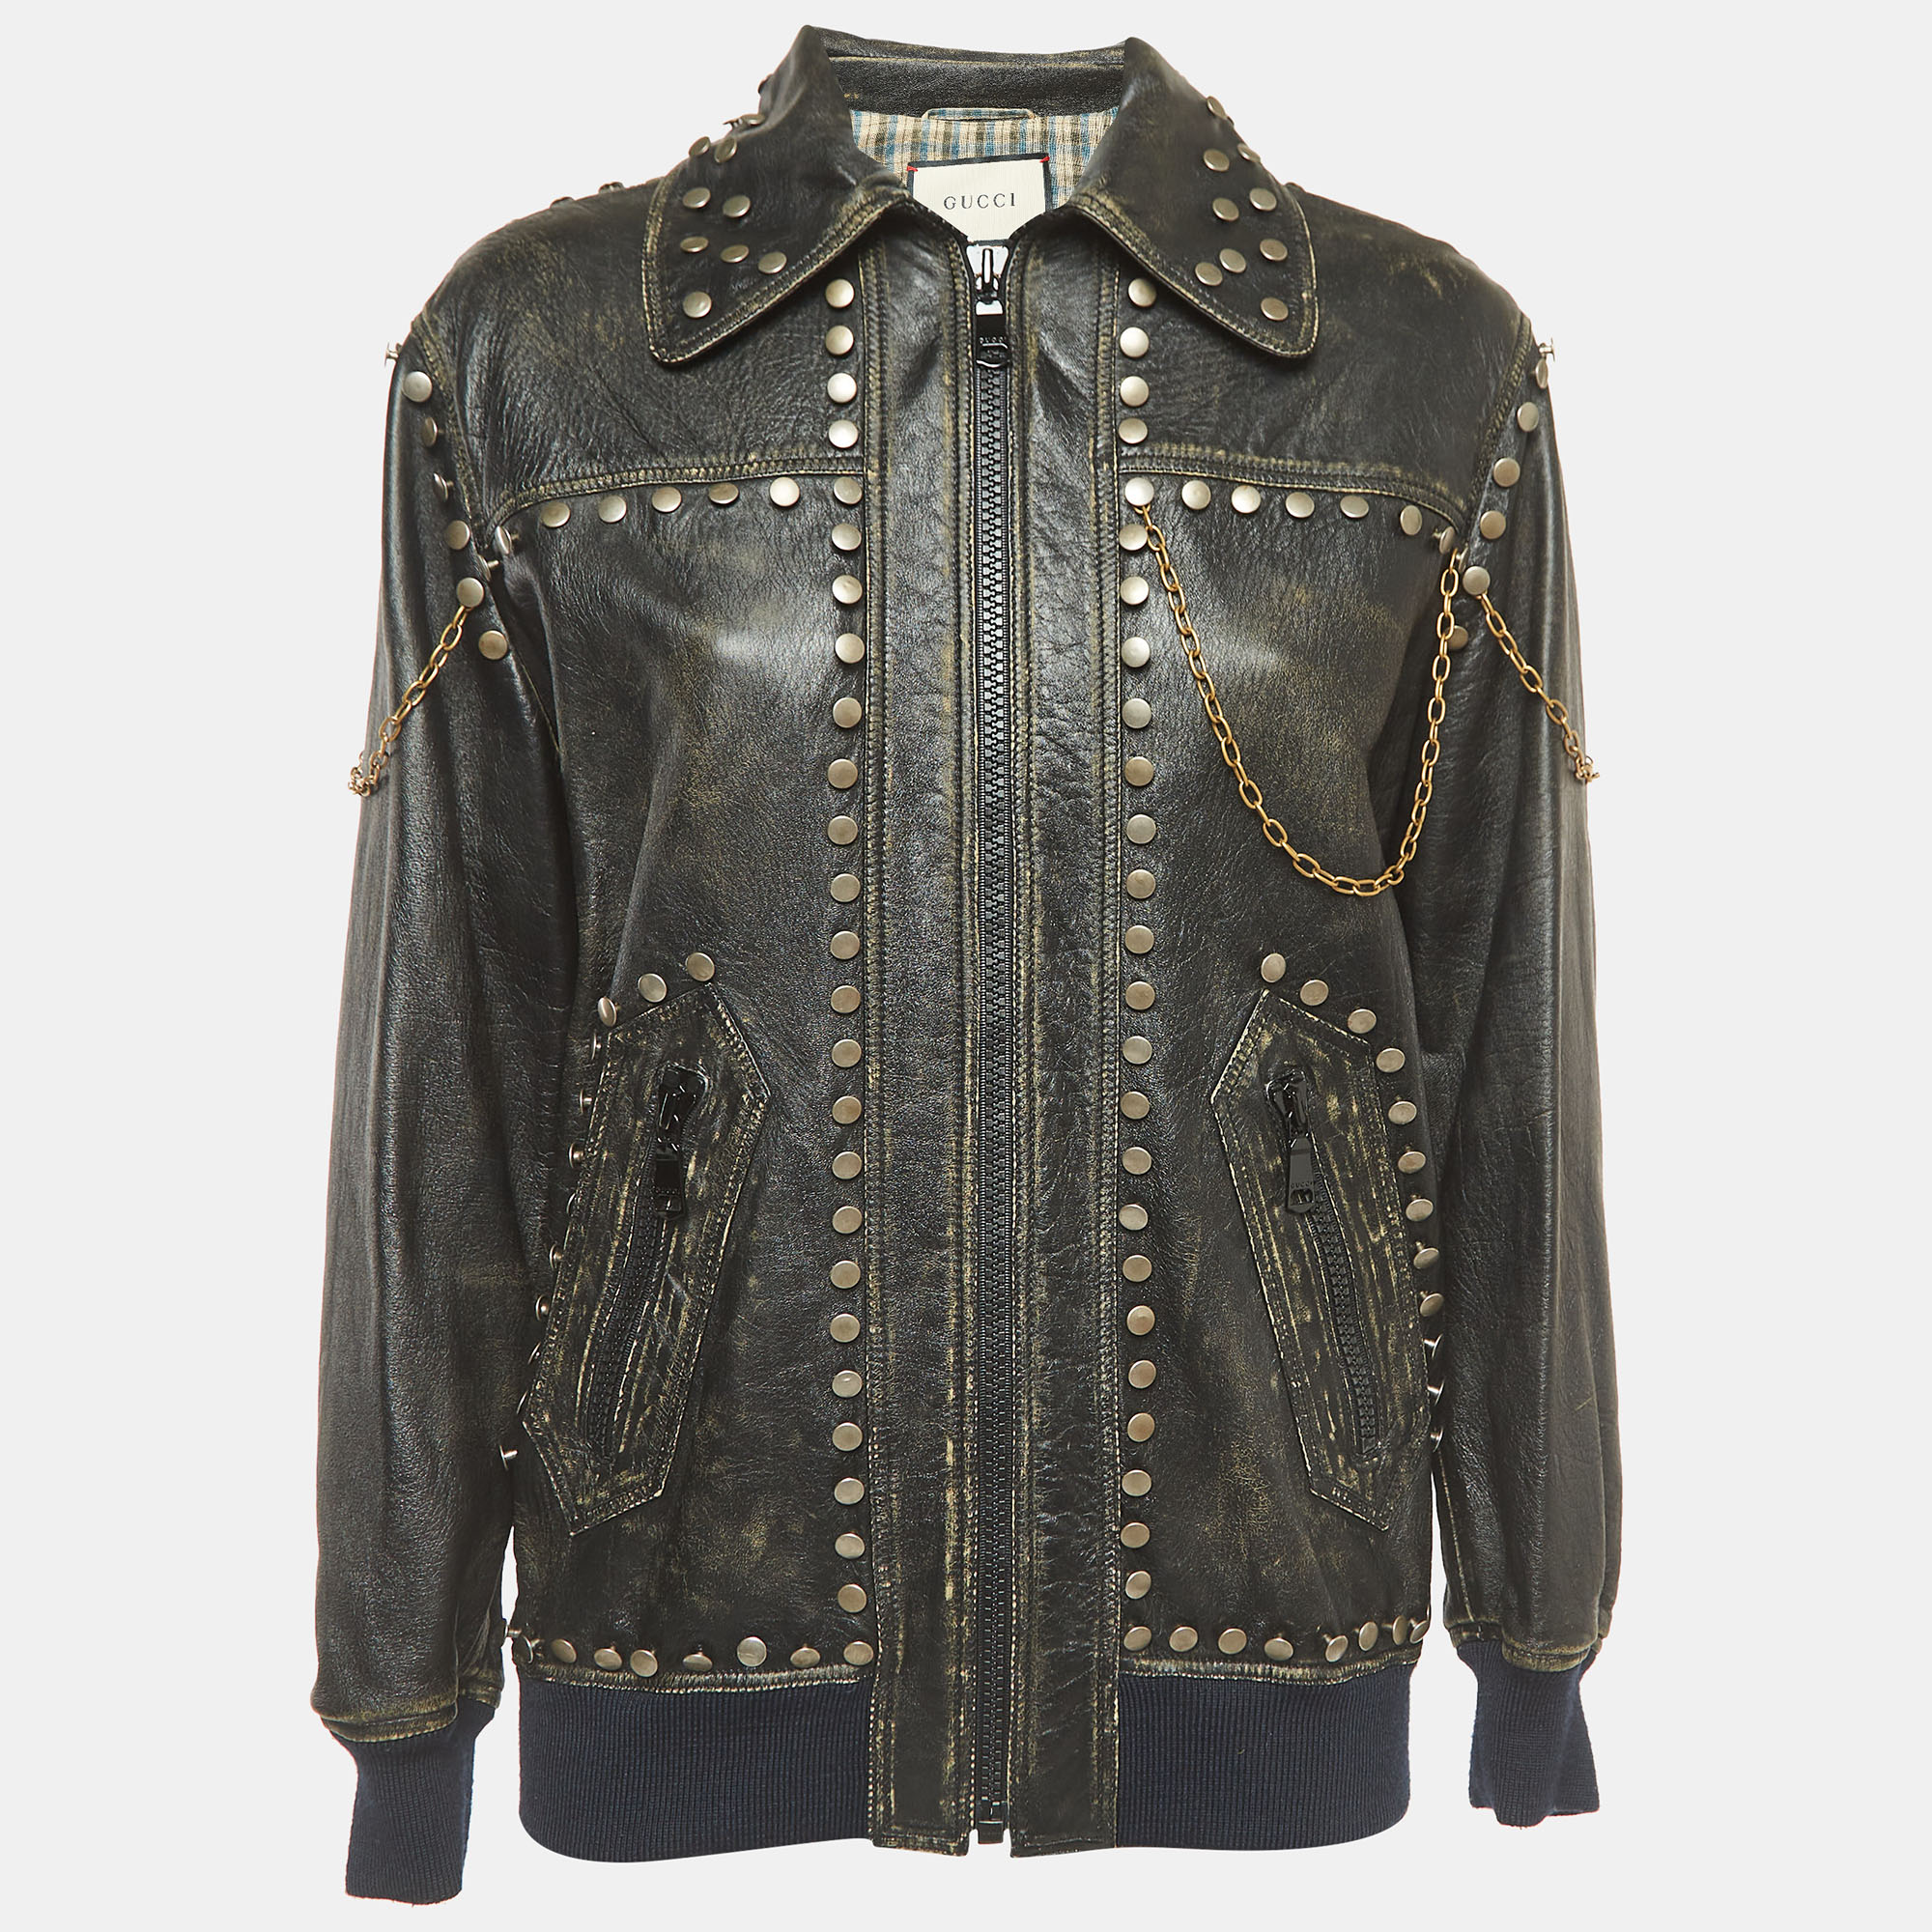 Gucci black studded vintage style leather jacket m